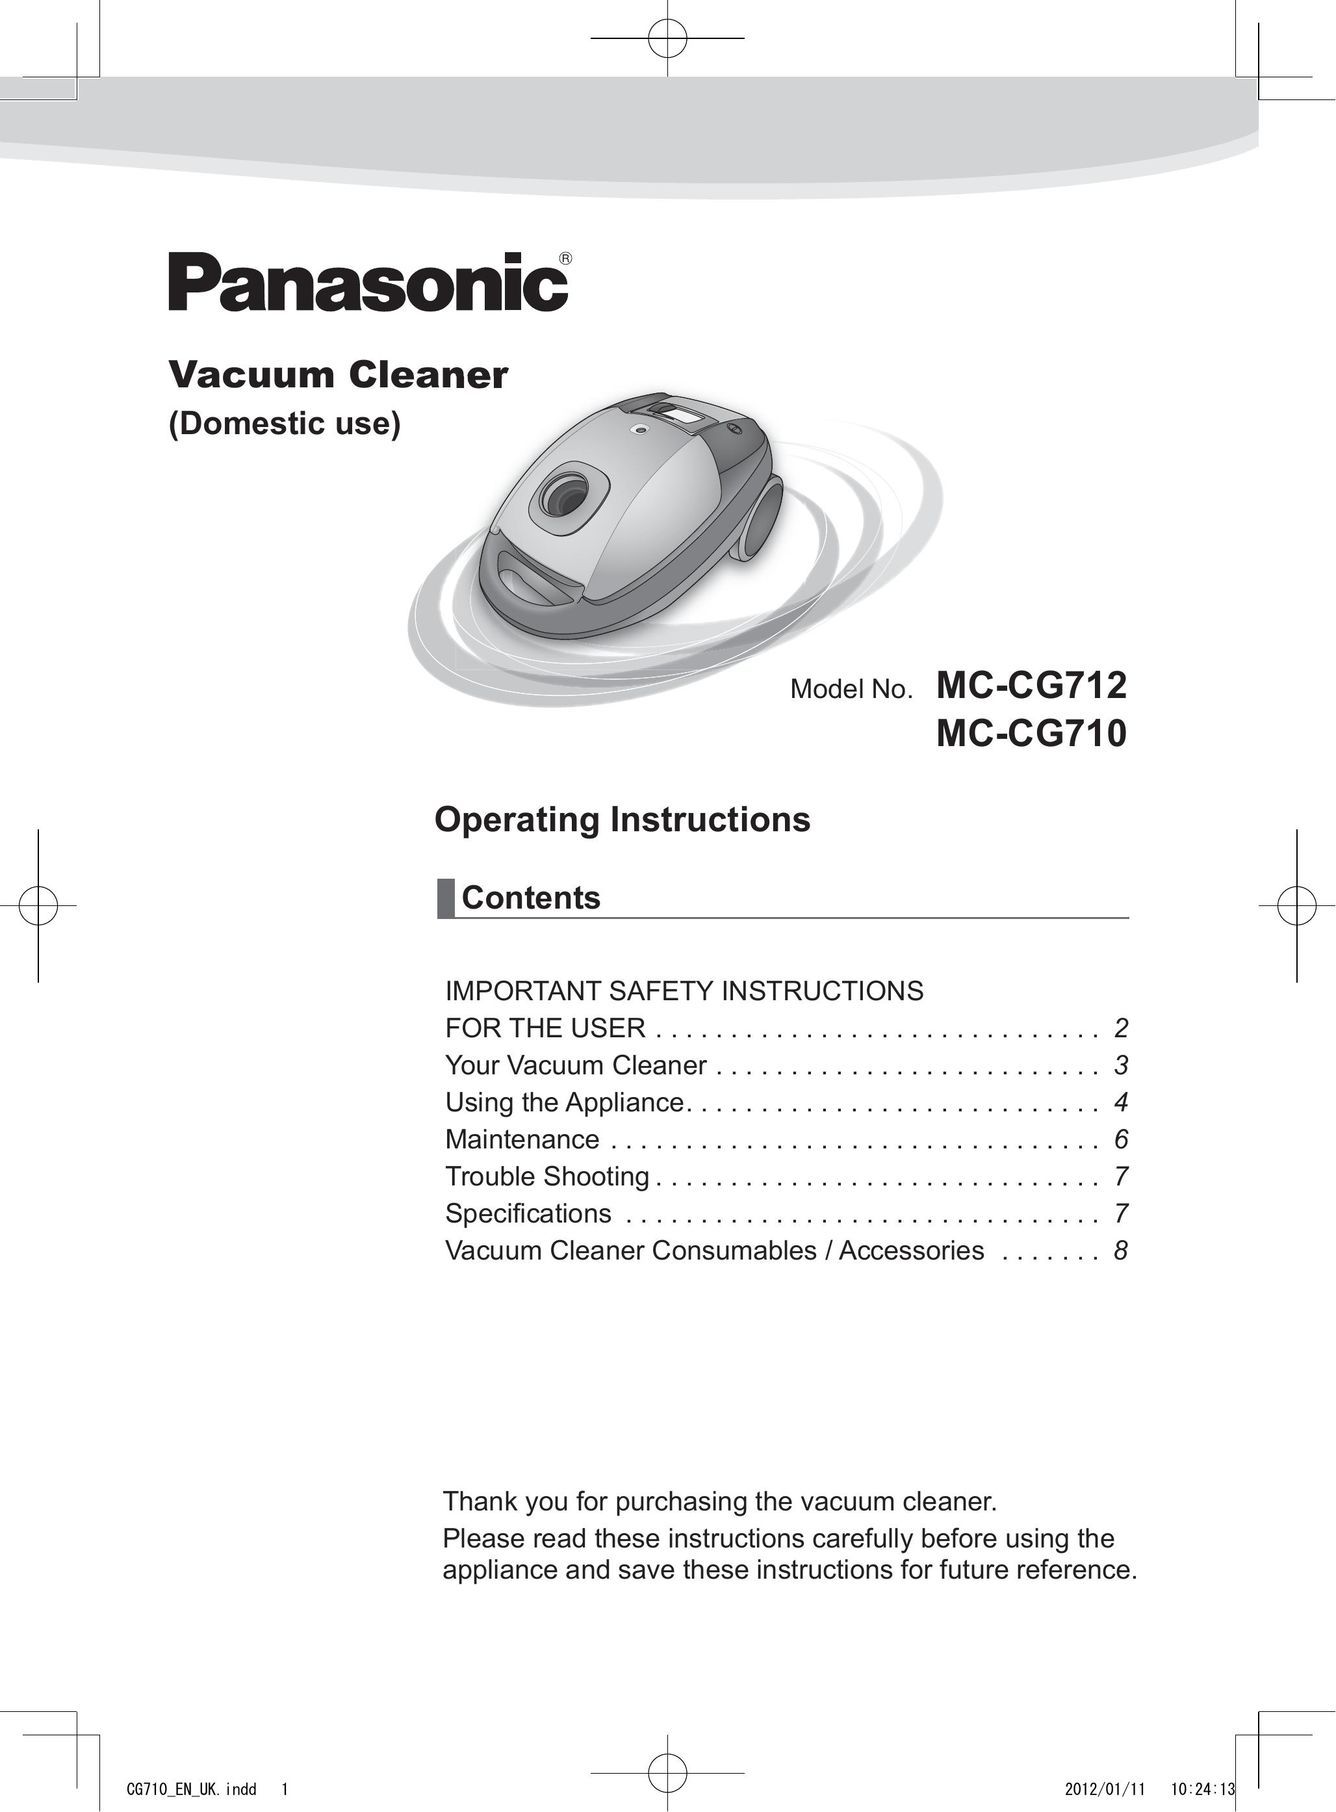 Panasonic MC-CG710 Vacuum Cleaner User Manual